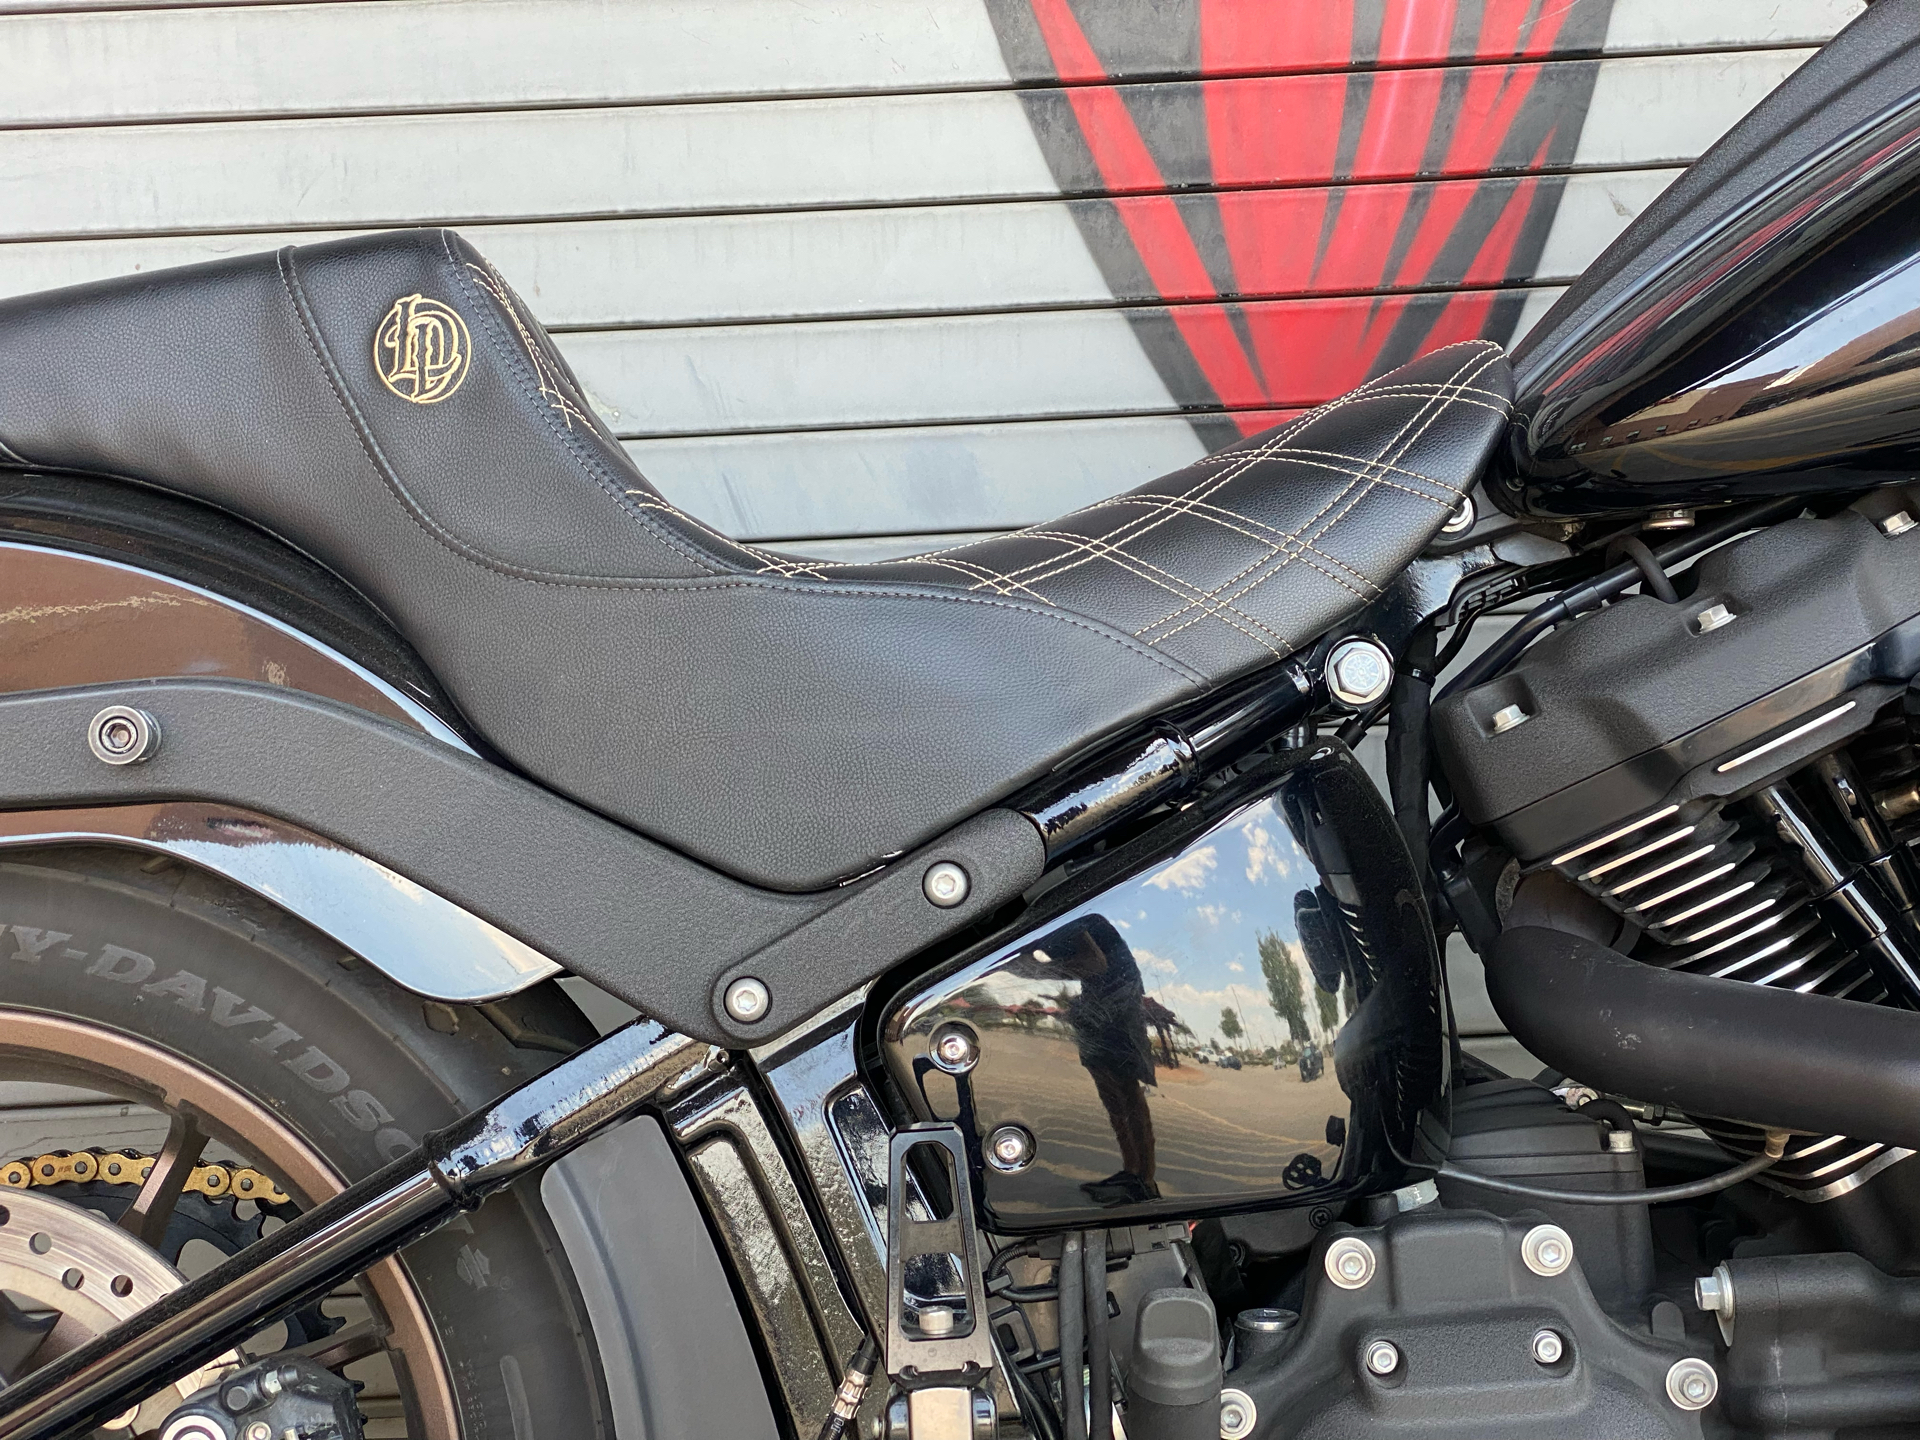 2020 Harley-Davidson Low Rider®S in Carrollton, Texas - Photo 8